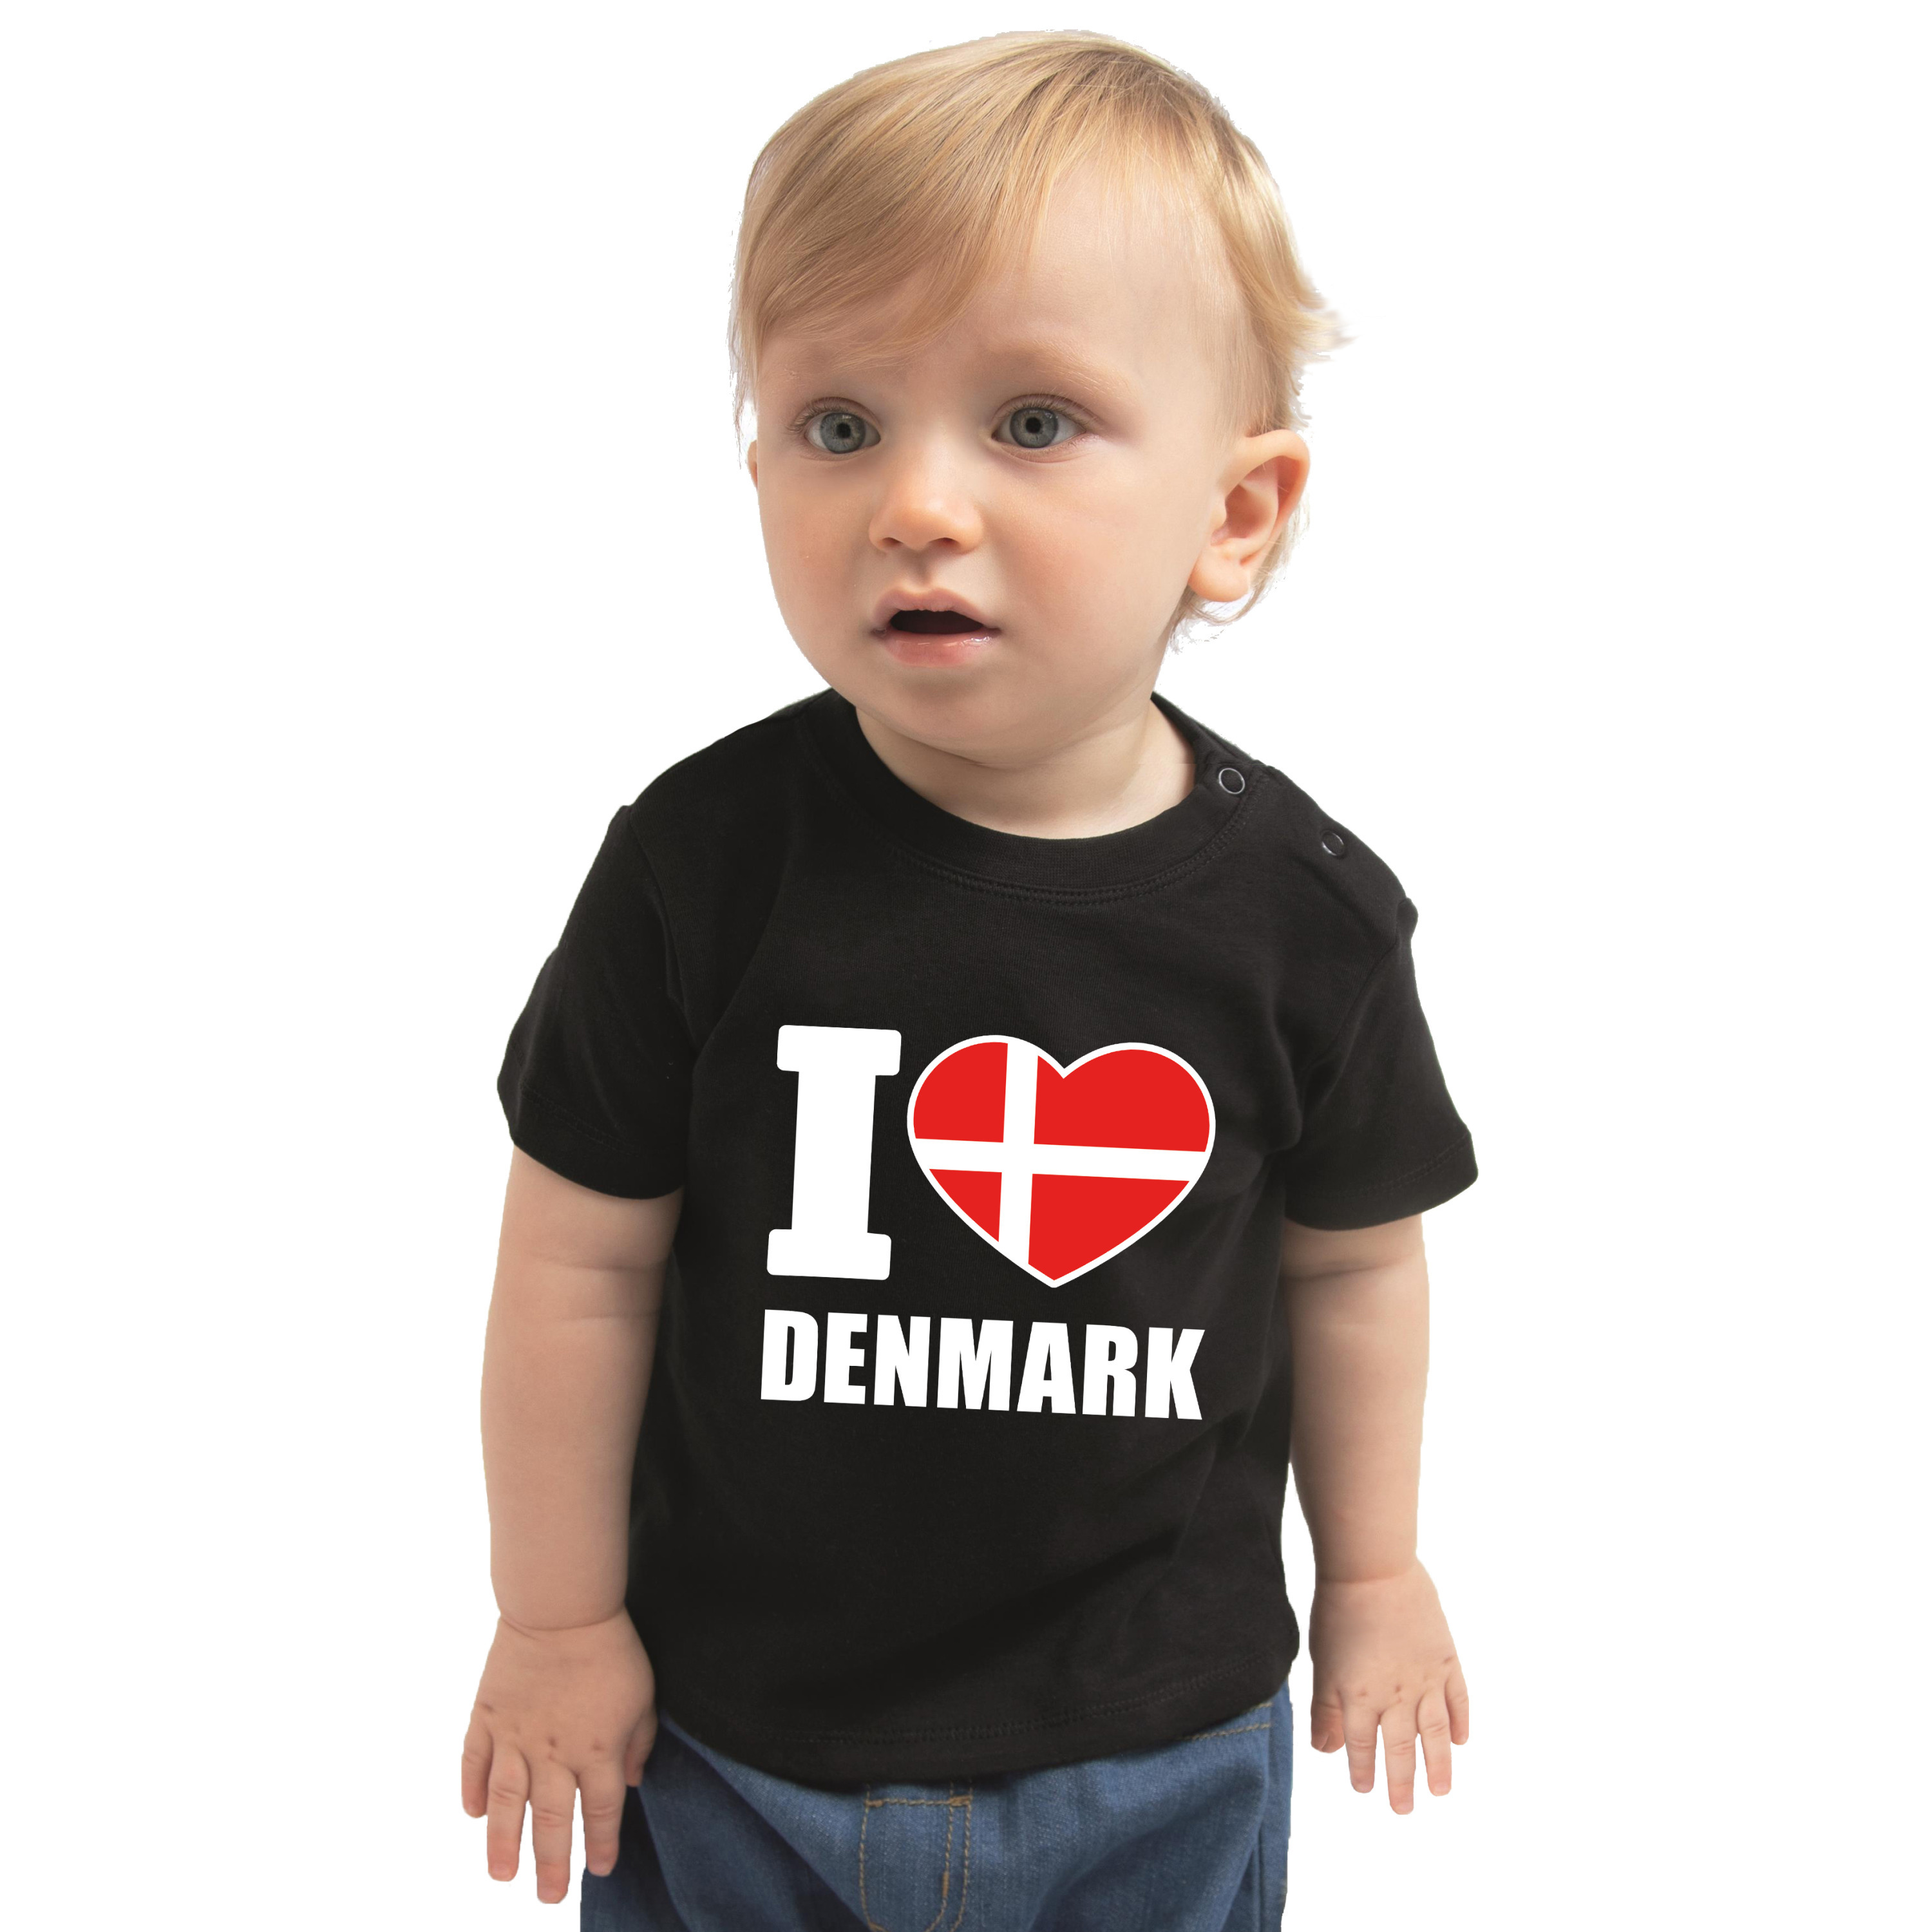 I love Denmark-Denemarken landen shirtje zwart voor babys